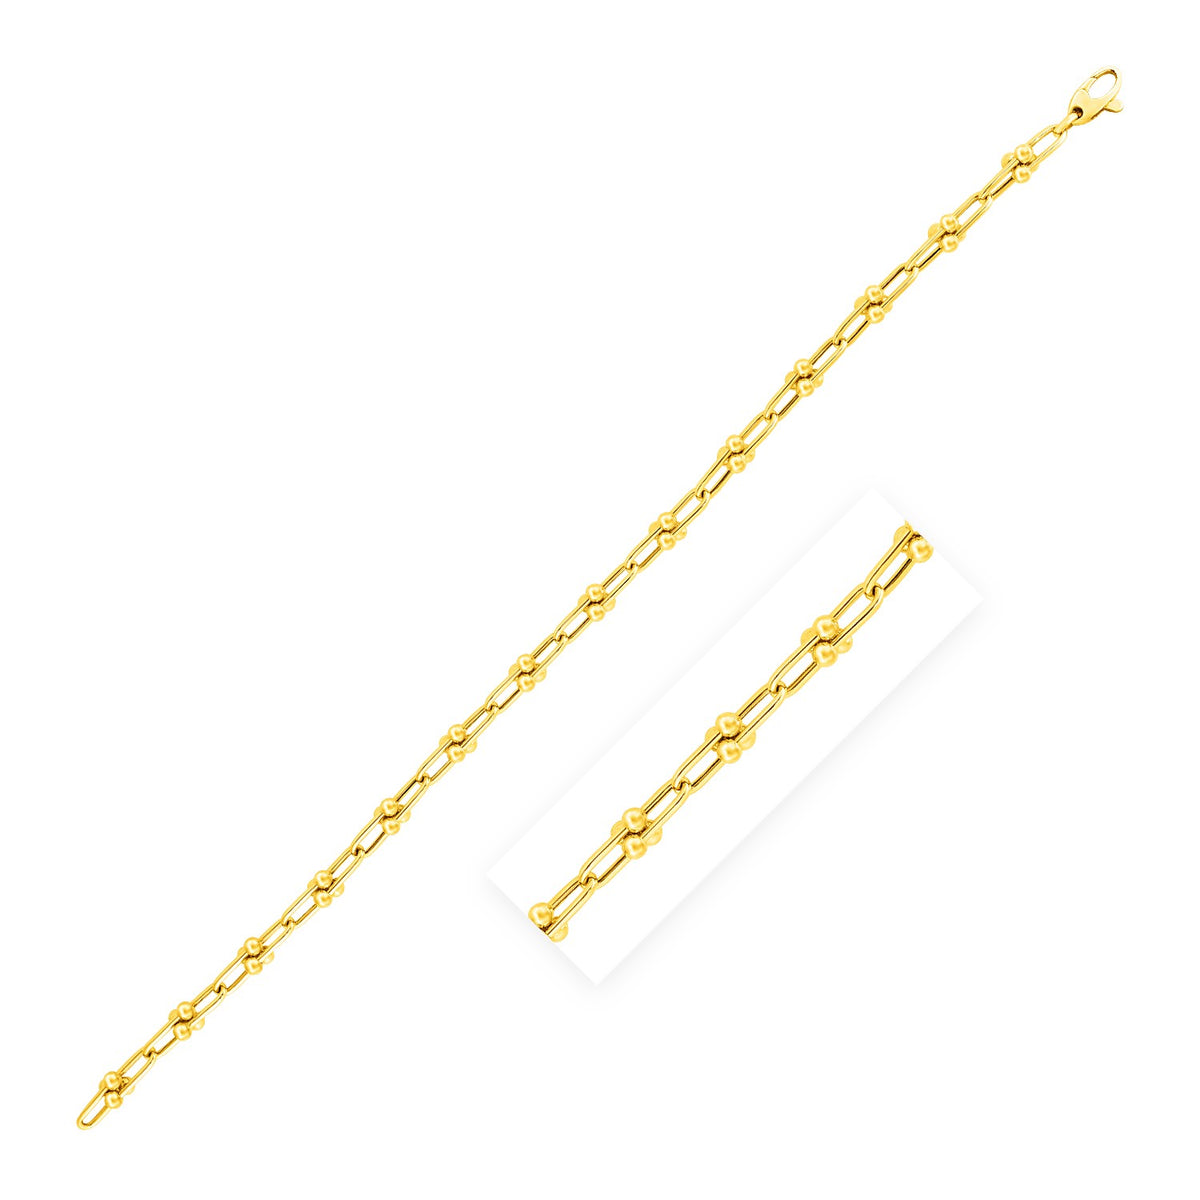 Jax Chain Bracelet - 14k Yellow Gold 7 1/2 Inch 3.00mm